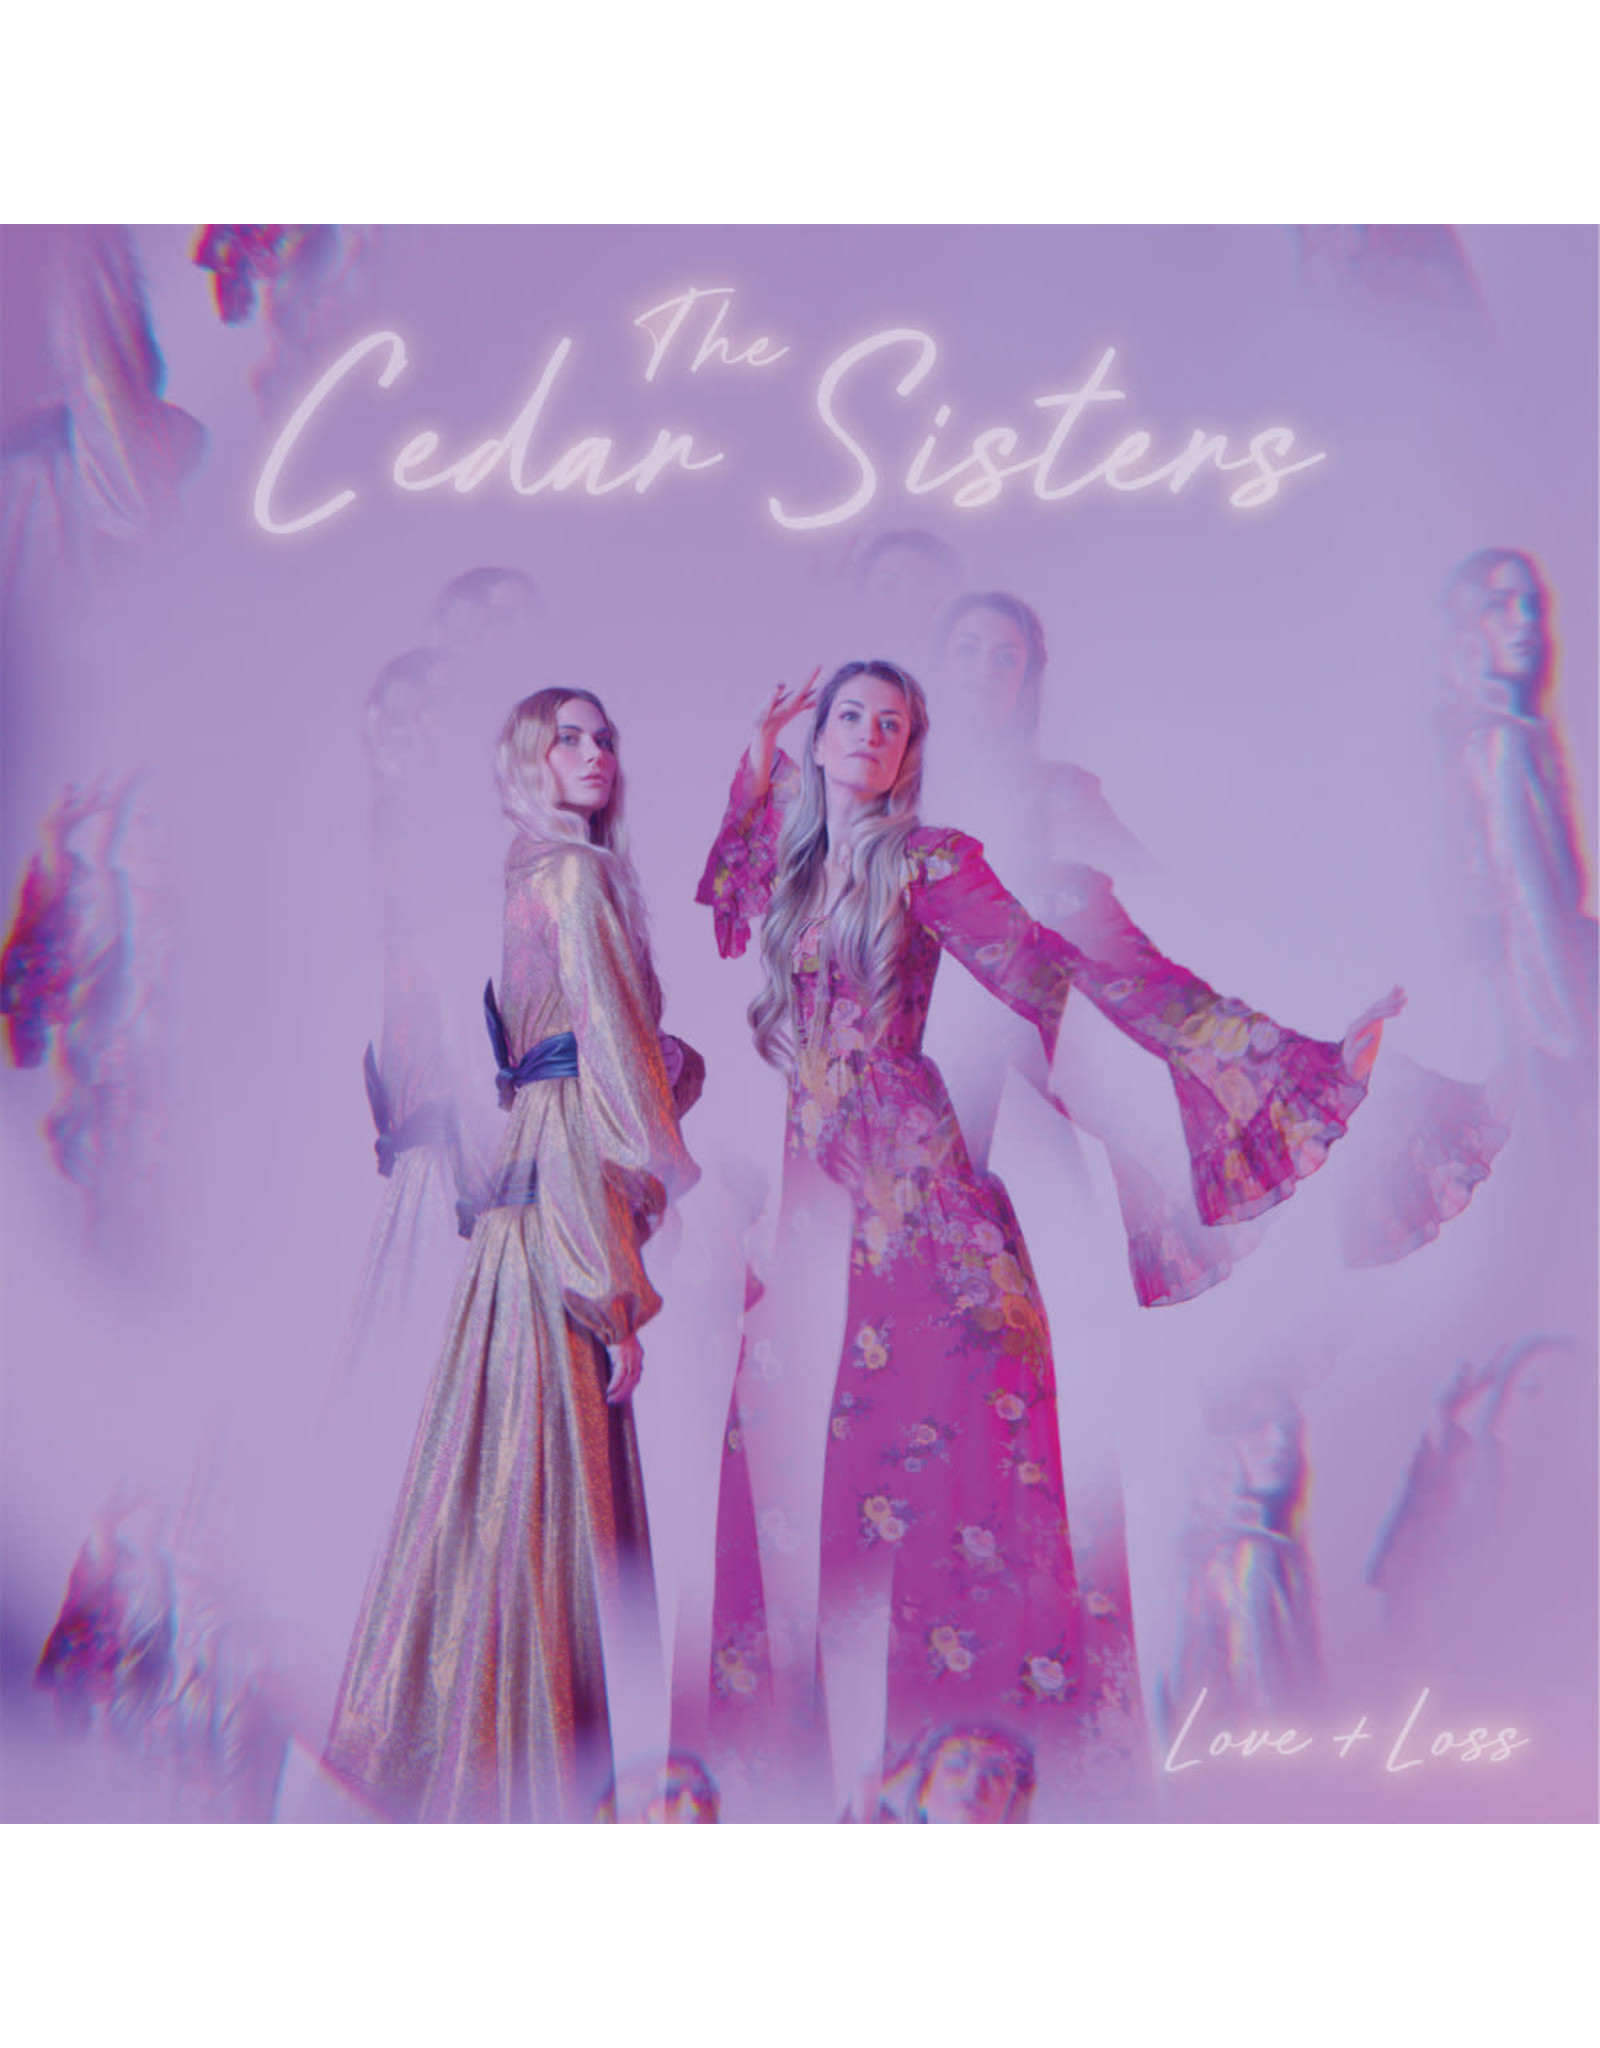 Cedar Sisters, The - Love + Loss LP